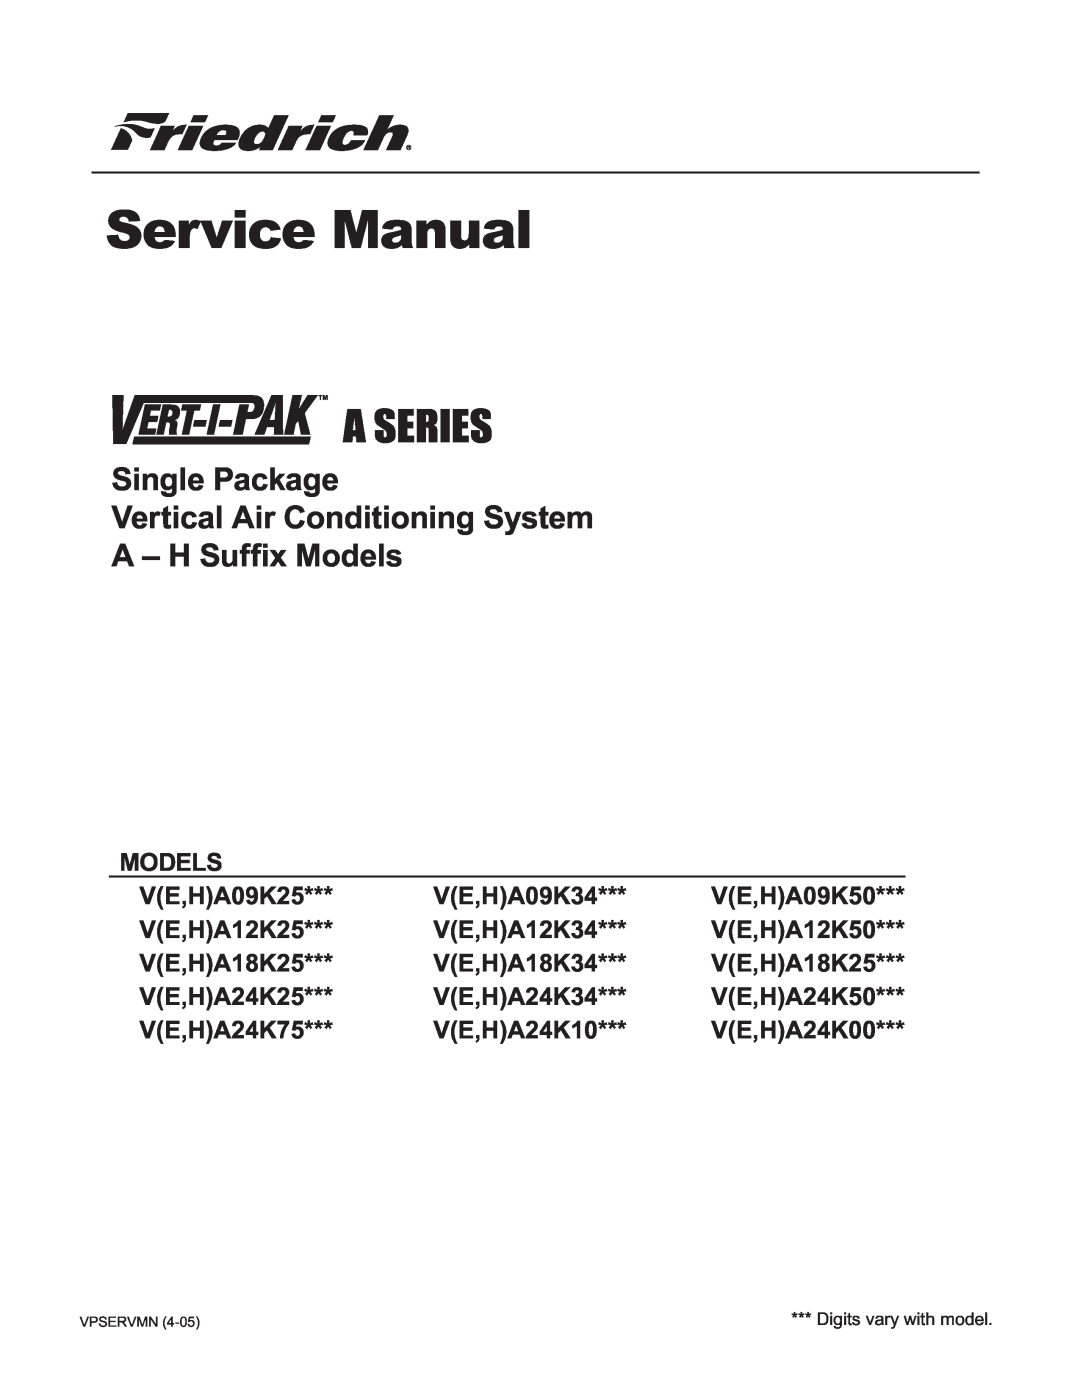 Friedrich V(E service manual Single Package Vertical Air Conditioning System, A - H Sufﬁx Models, VE,HA09K25, VE,HA09K34 